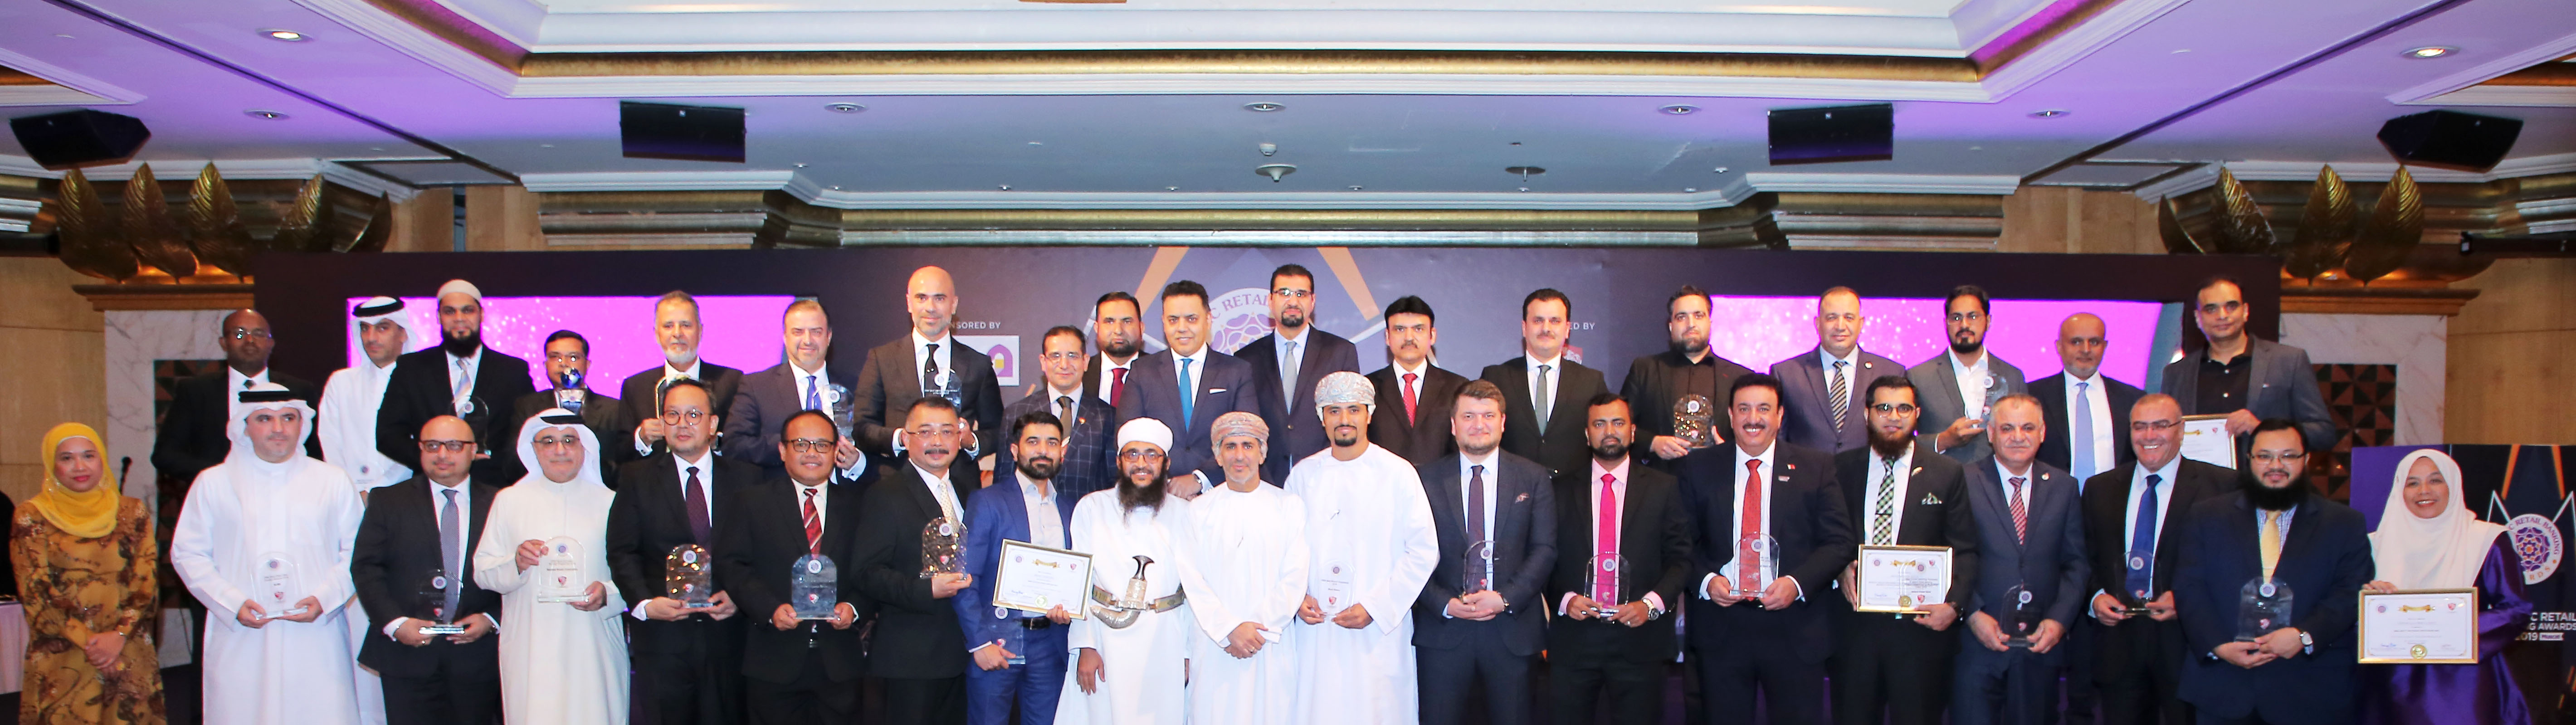 Islamic Retail Banking Awards (IRBA) - Cambridge IFA